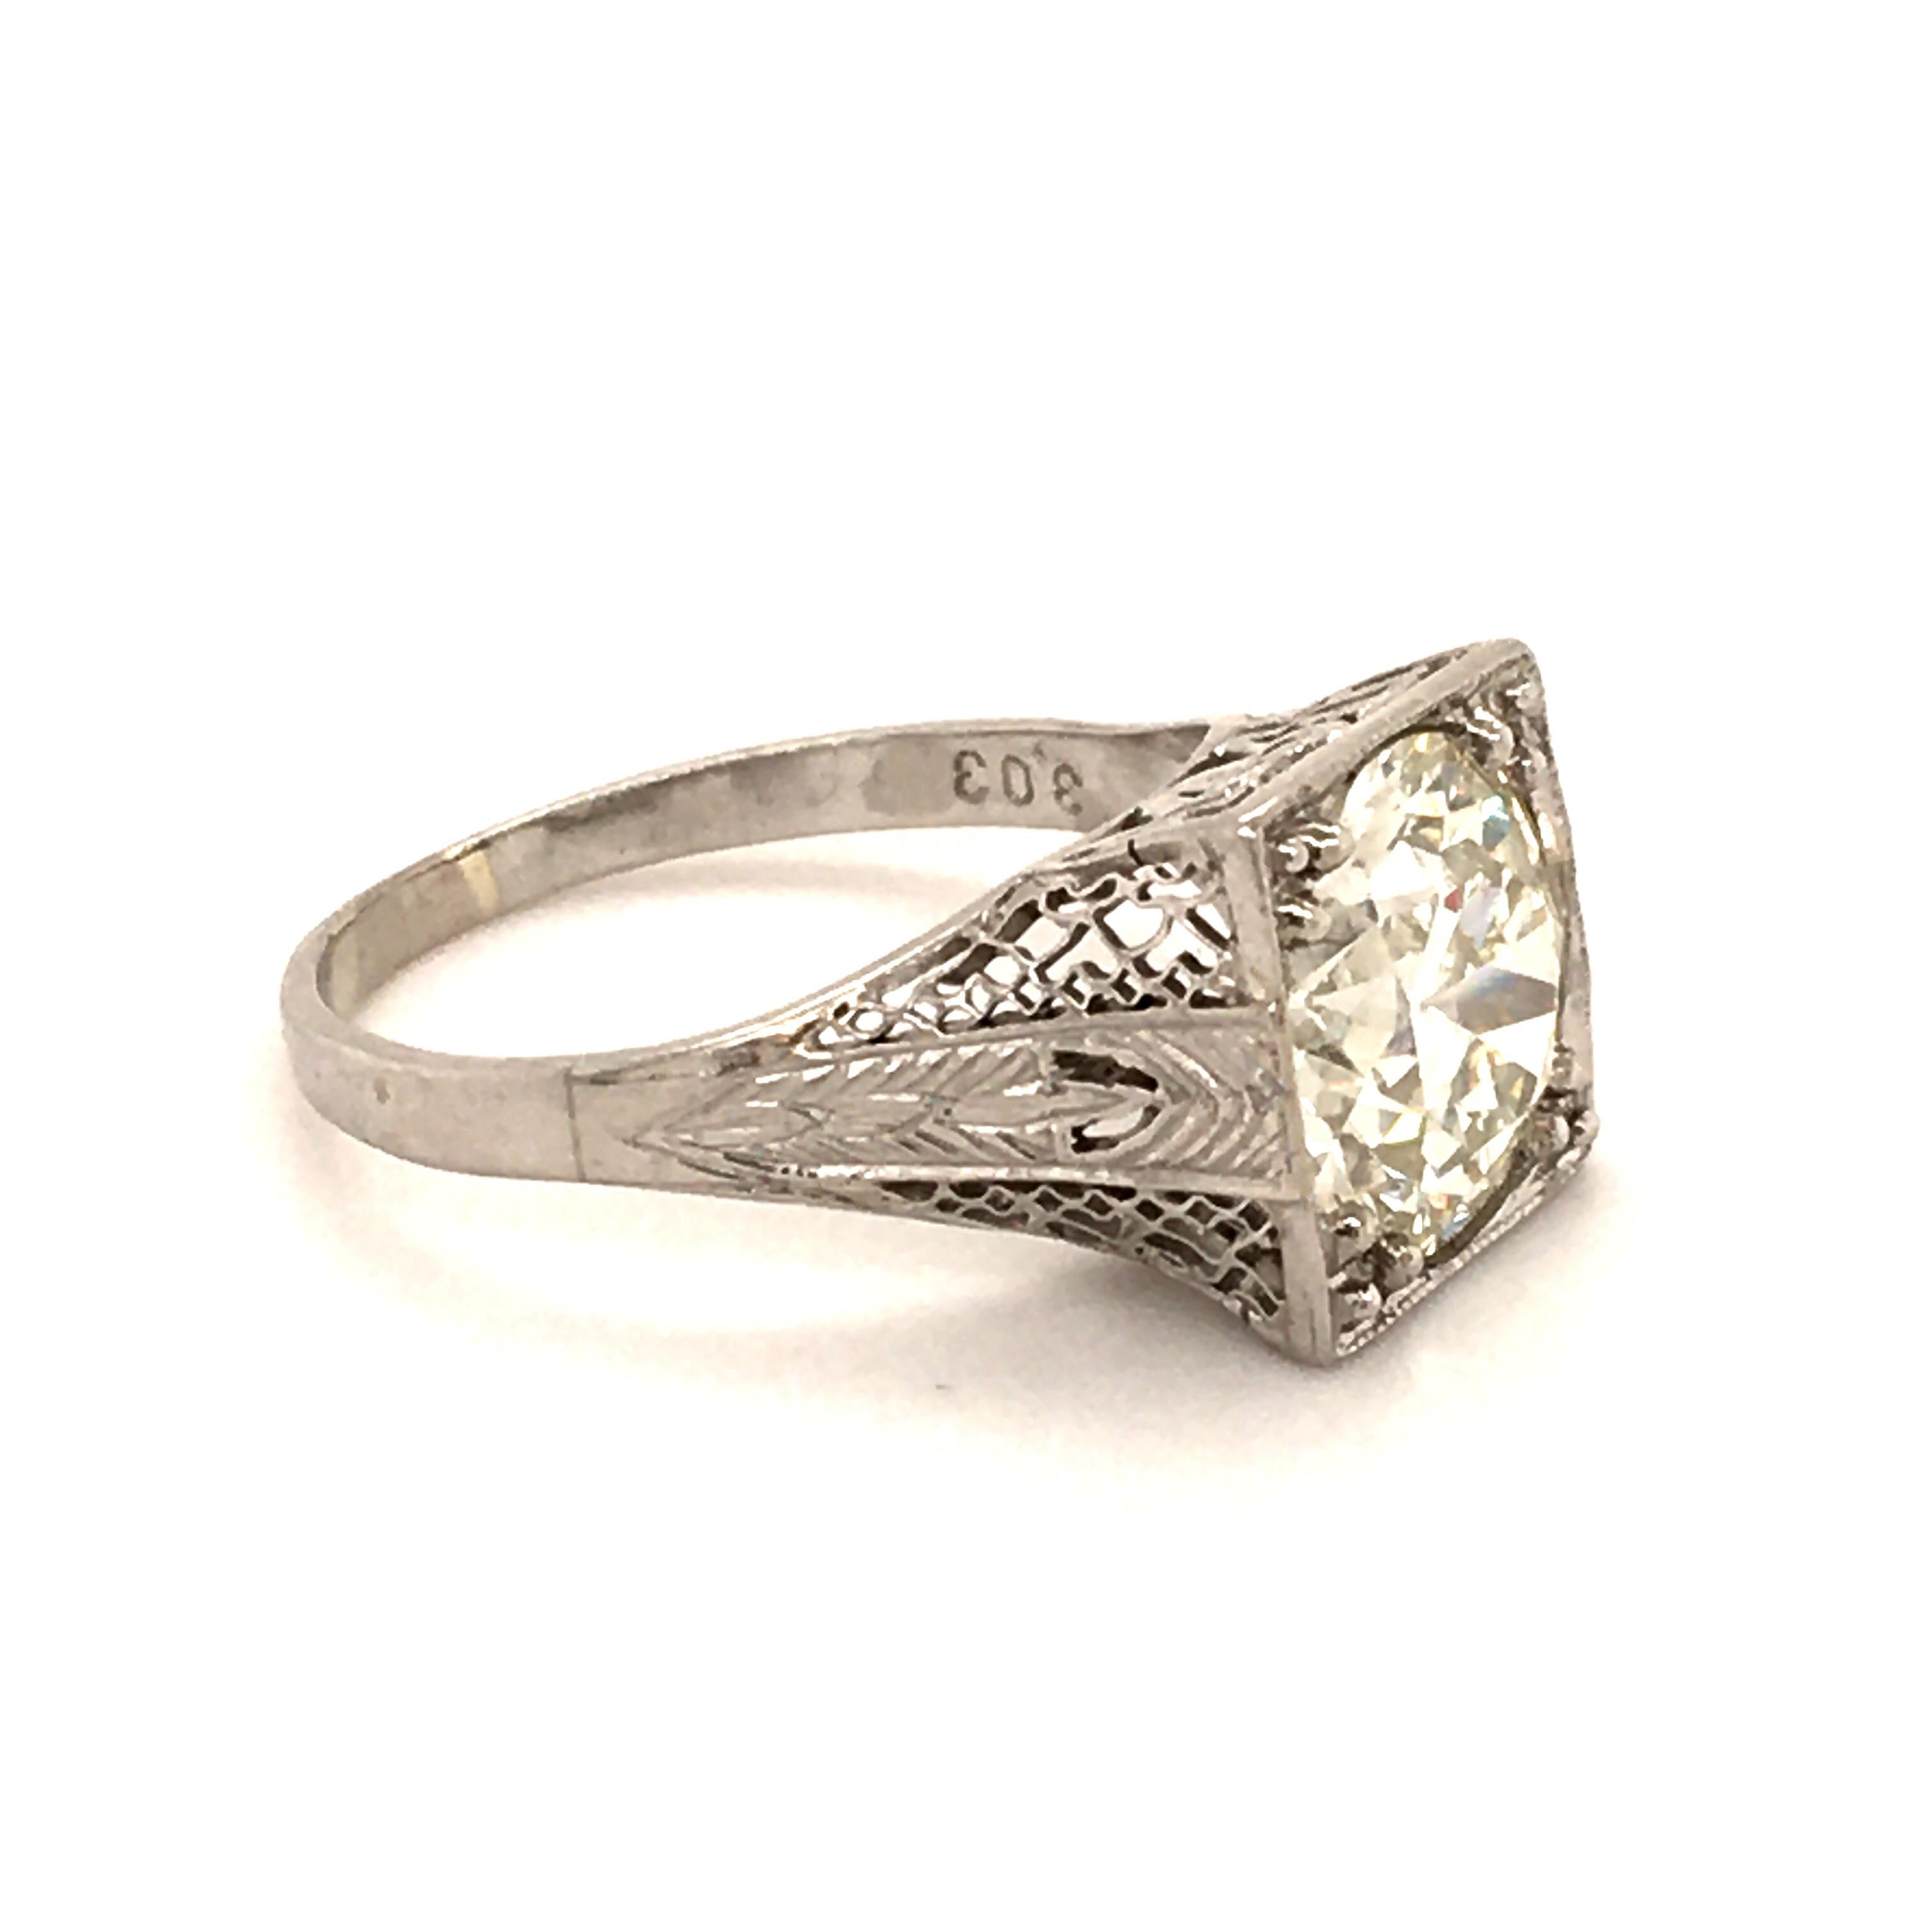 Art Deco Antique GIA Certified Old Cut Diamond Ring in Platinum